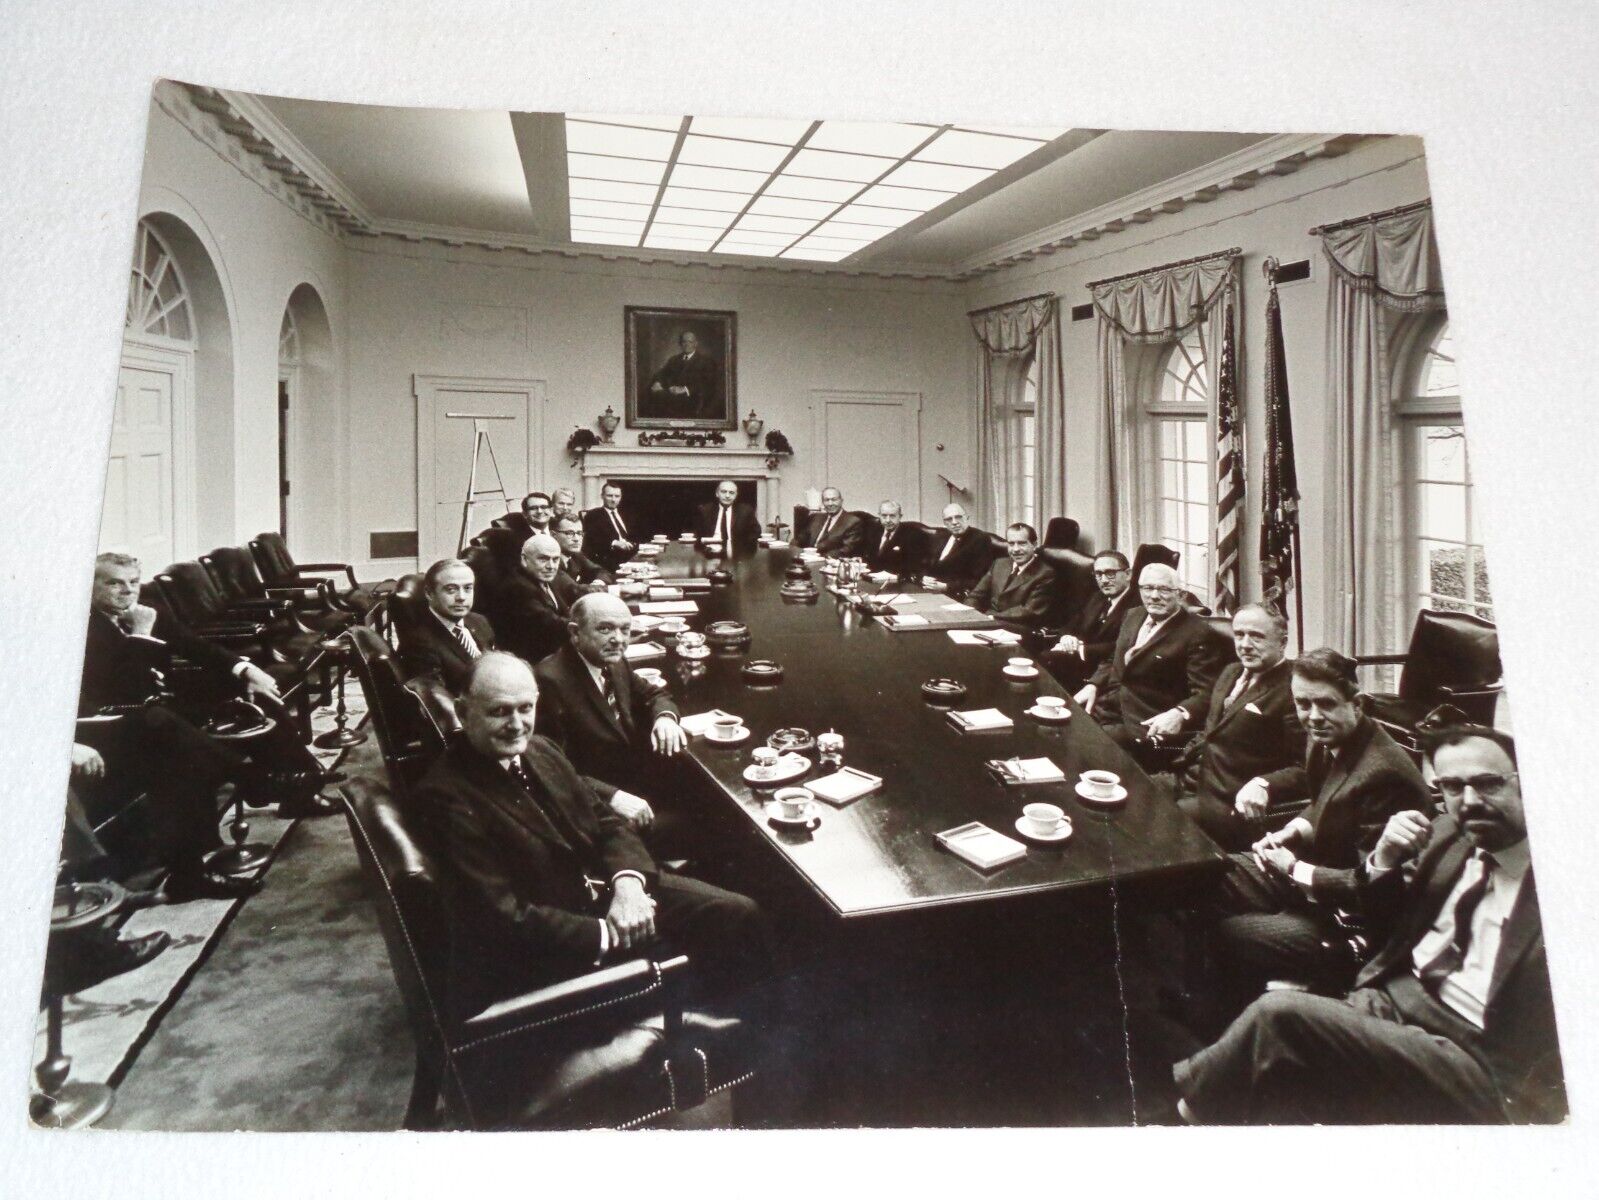 President Richard Nixon 1969 Official White House Photo Sent to William J. Casey